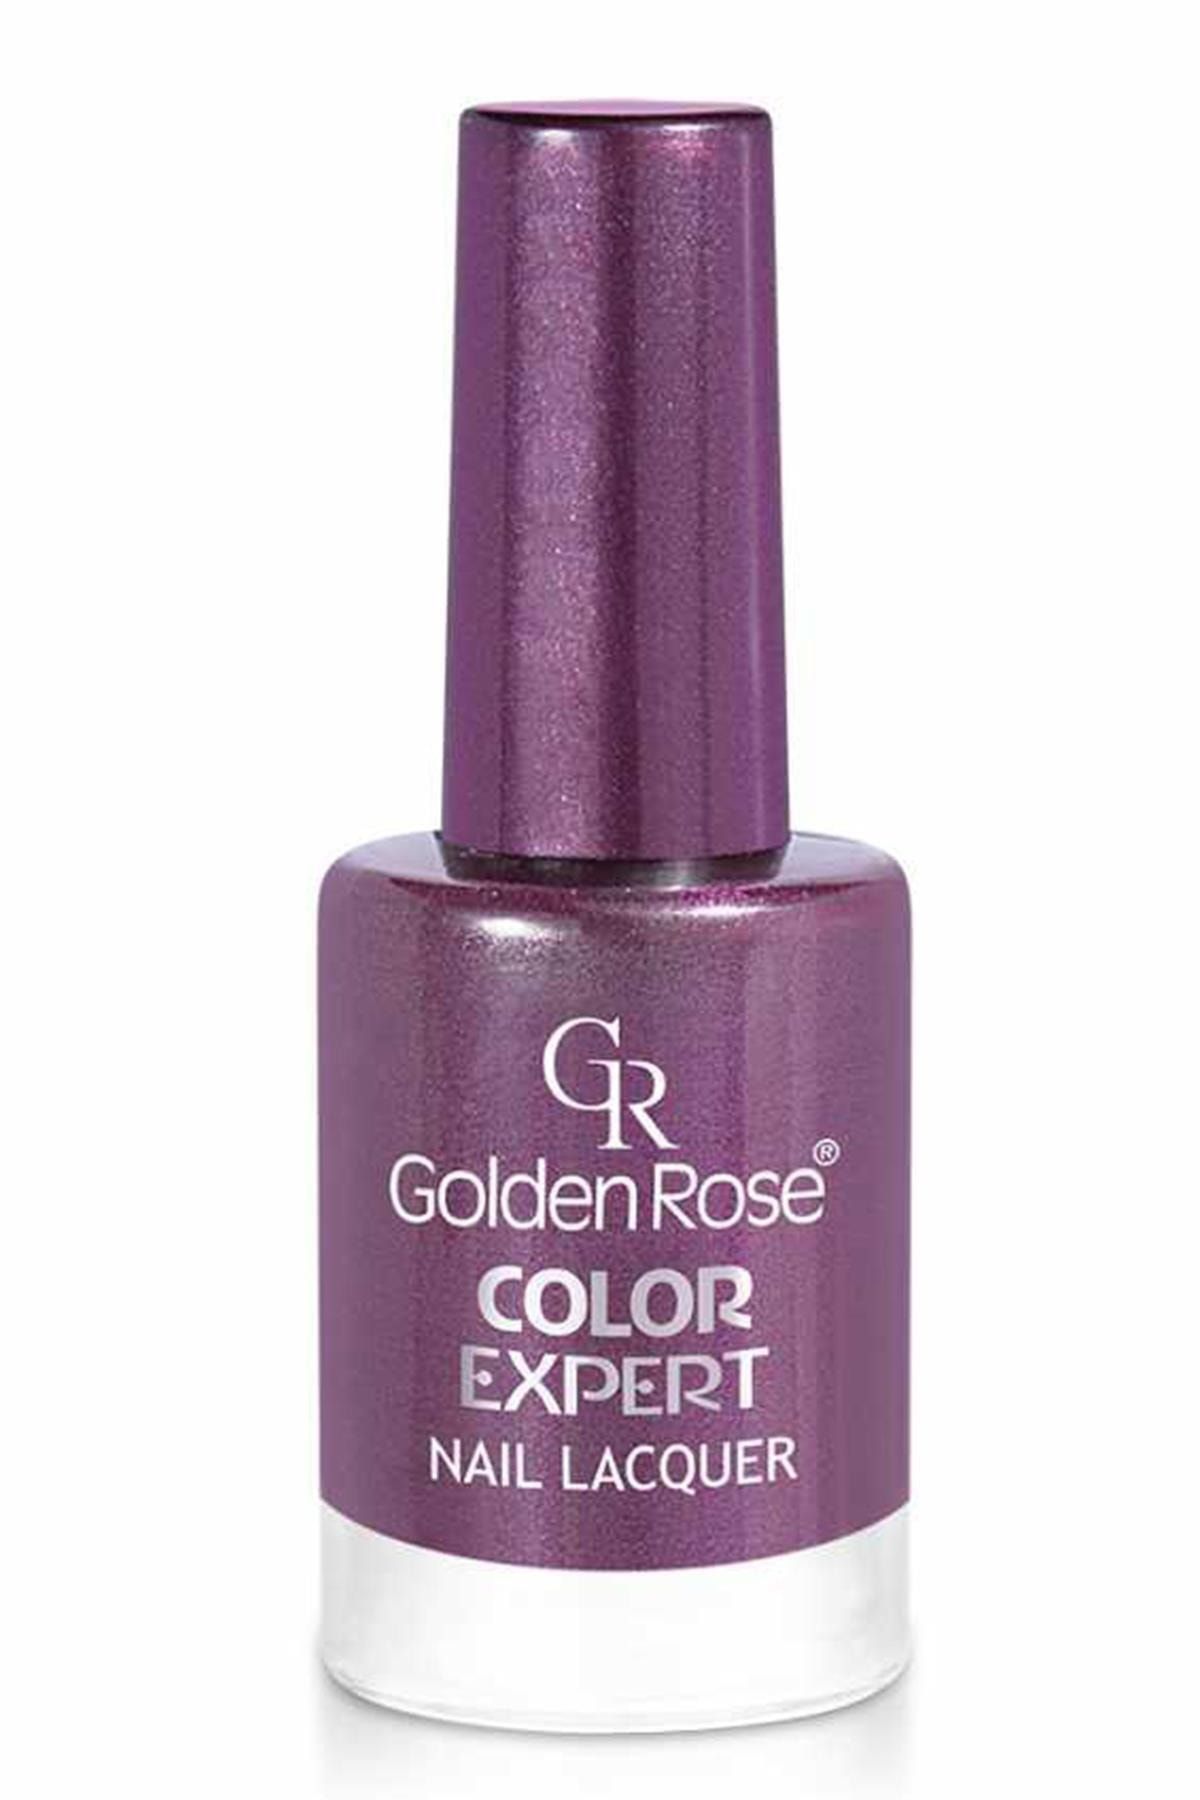 Golden Rose Oje - Color Expert Nail Lacquer No: 31 8691190703318